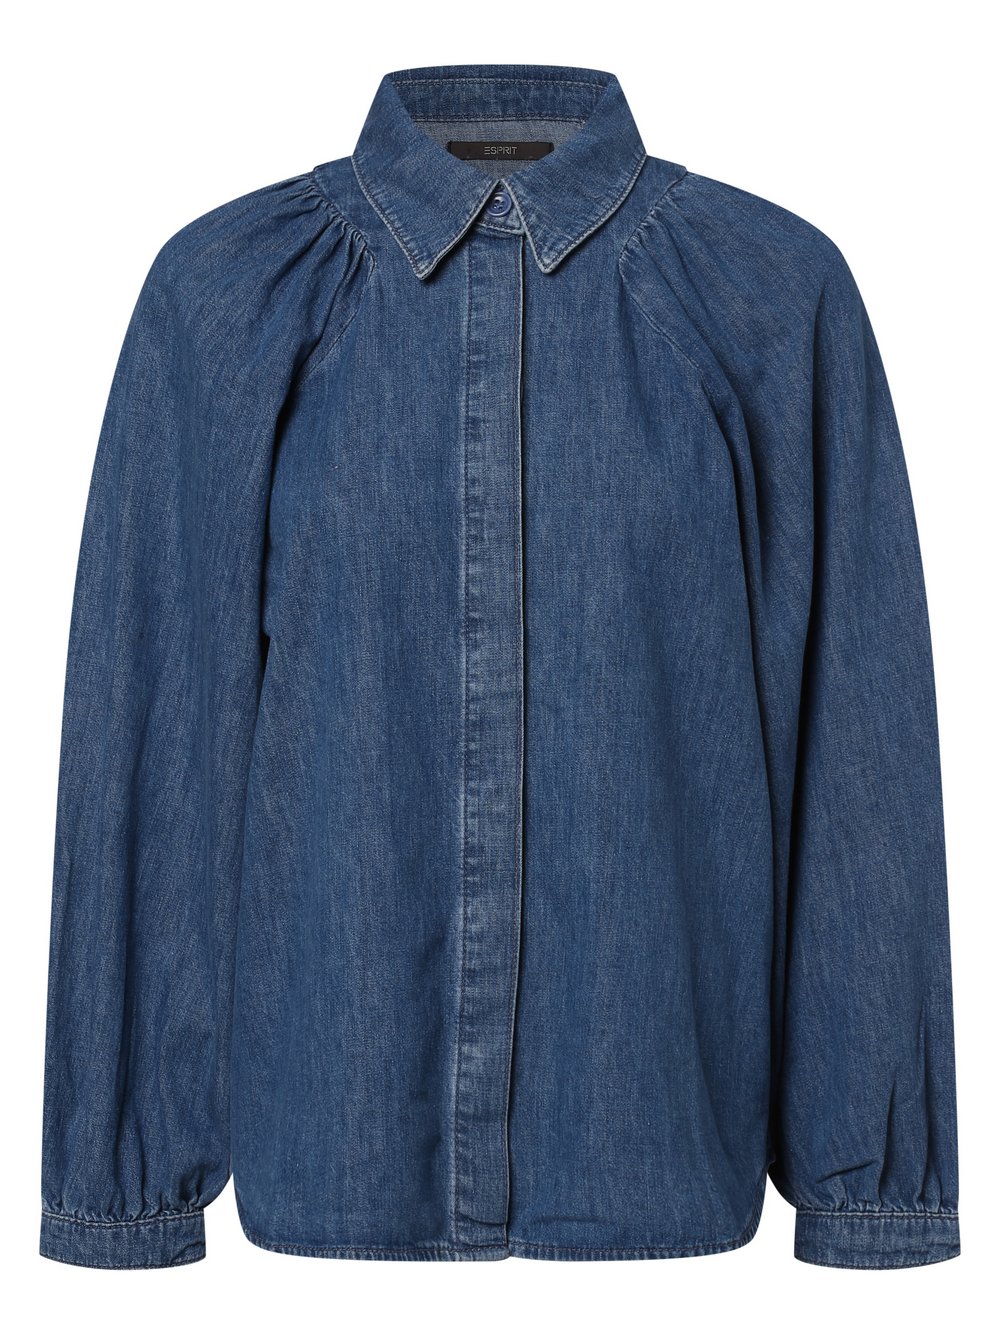 Esprit Collection - Damska koszula jeansowa, niebieski